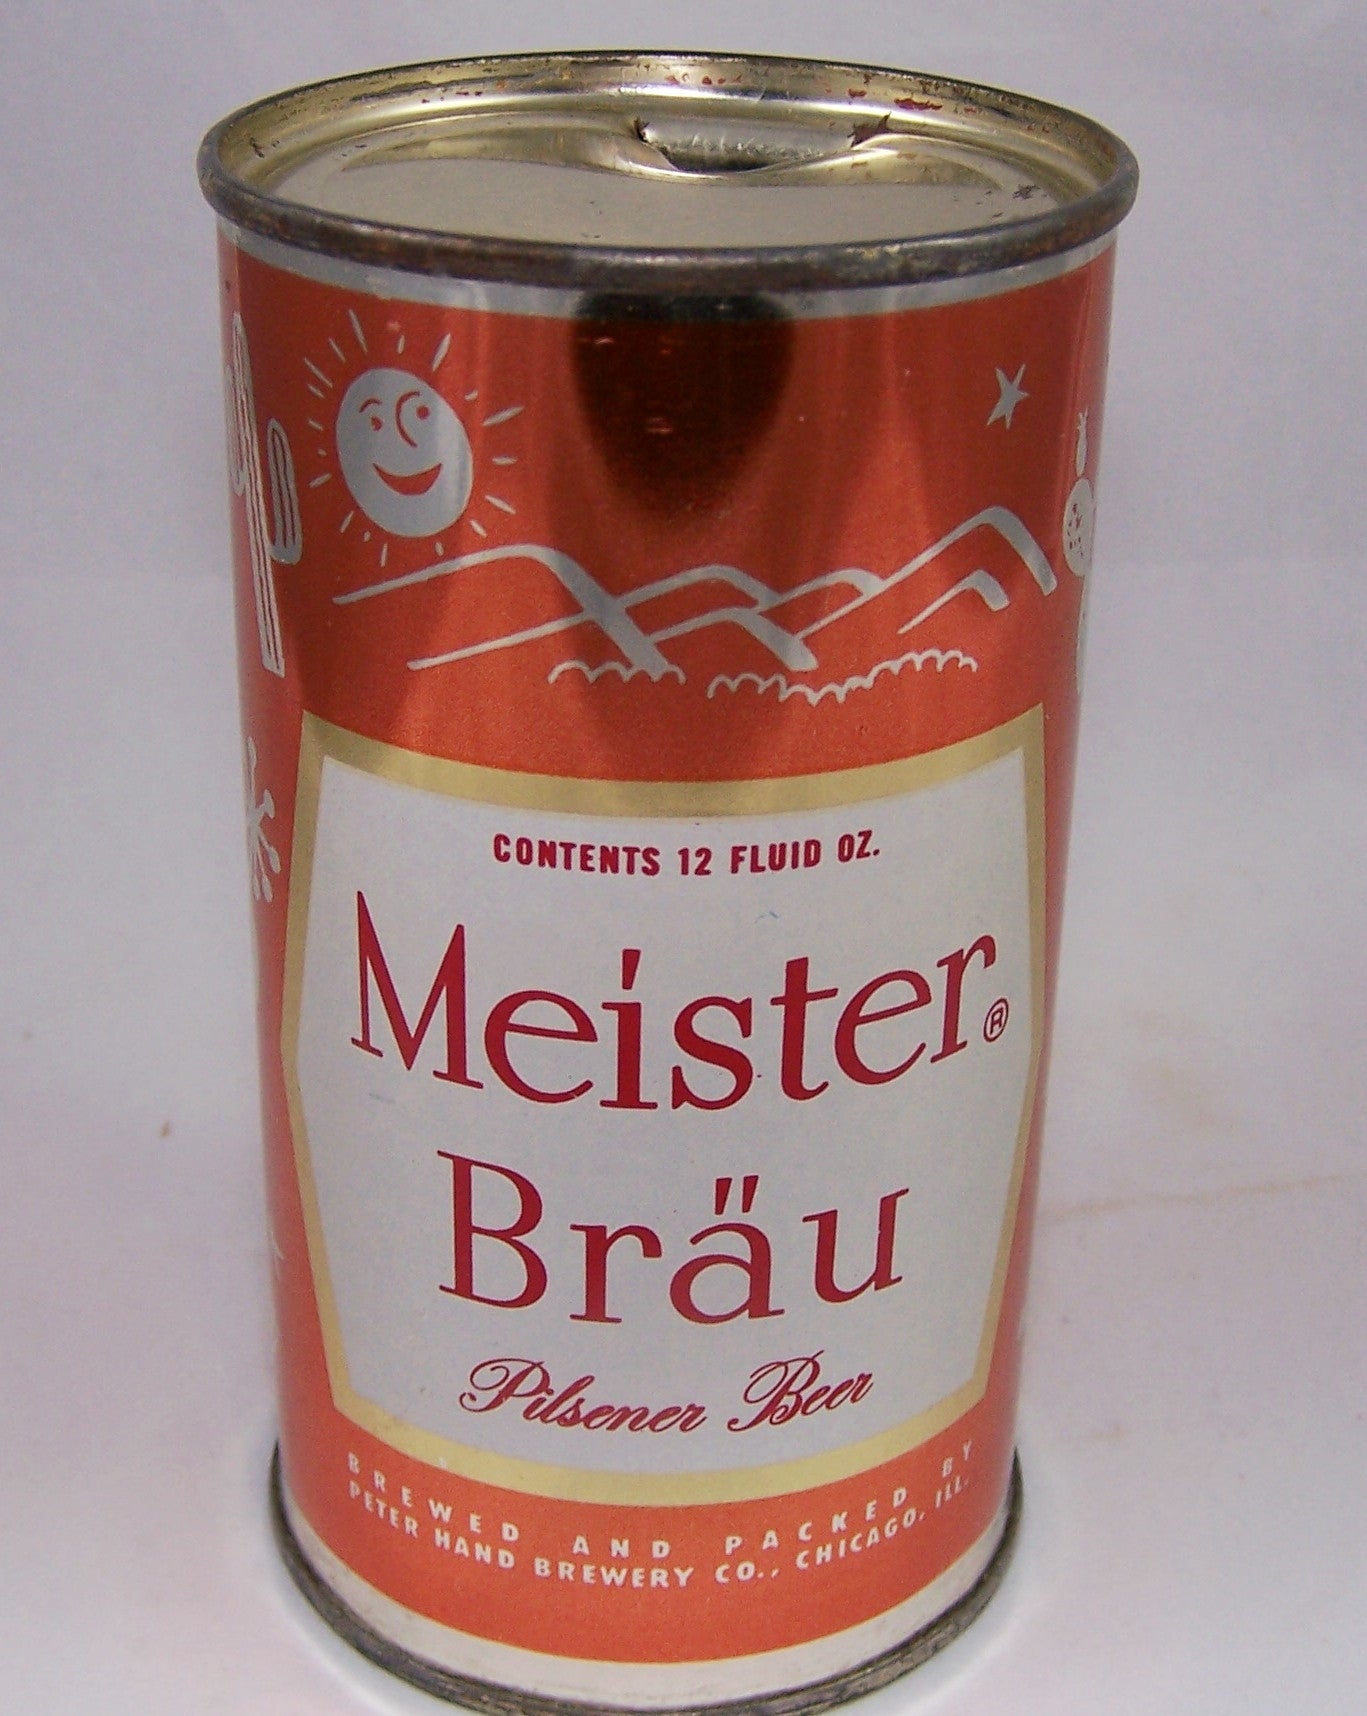 Meister Brau Pilsener Beer, (Ranch) USBC 95-36, Grade 1/1+ Sold on 9/14/15